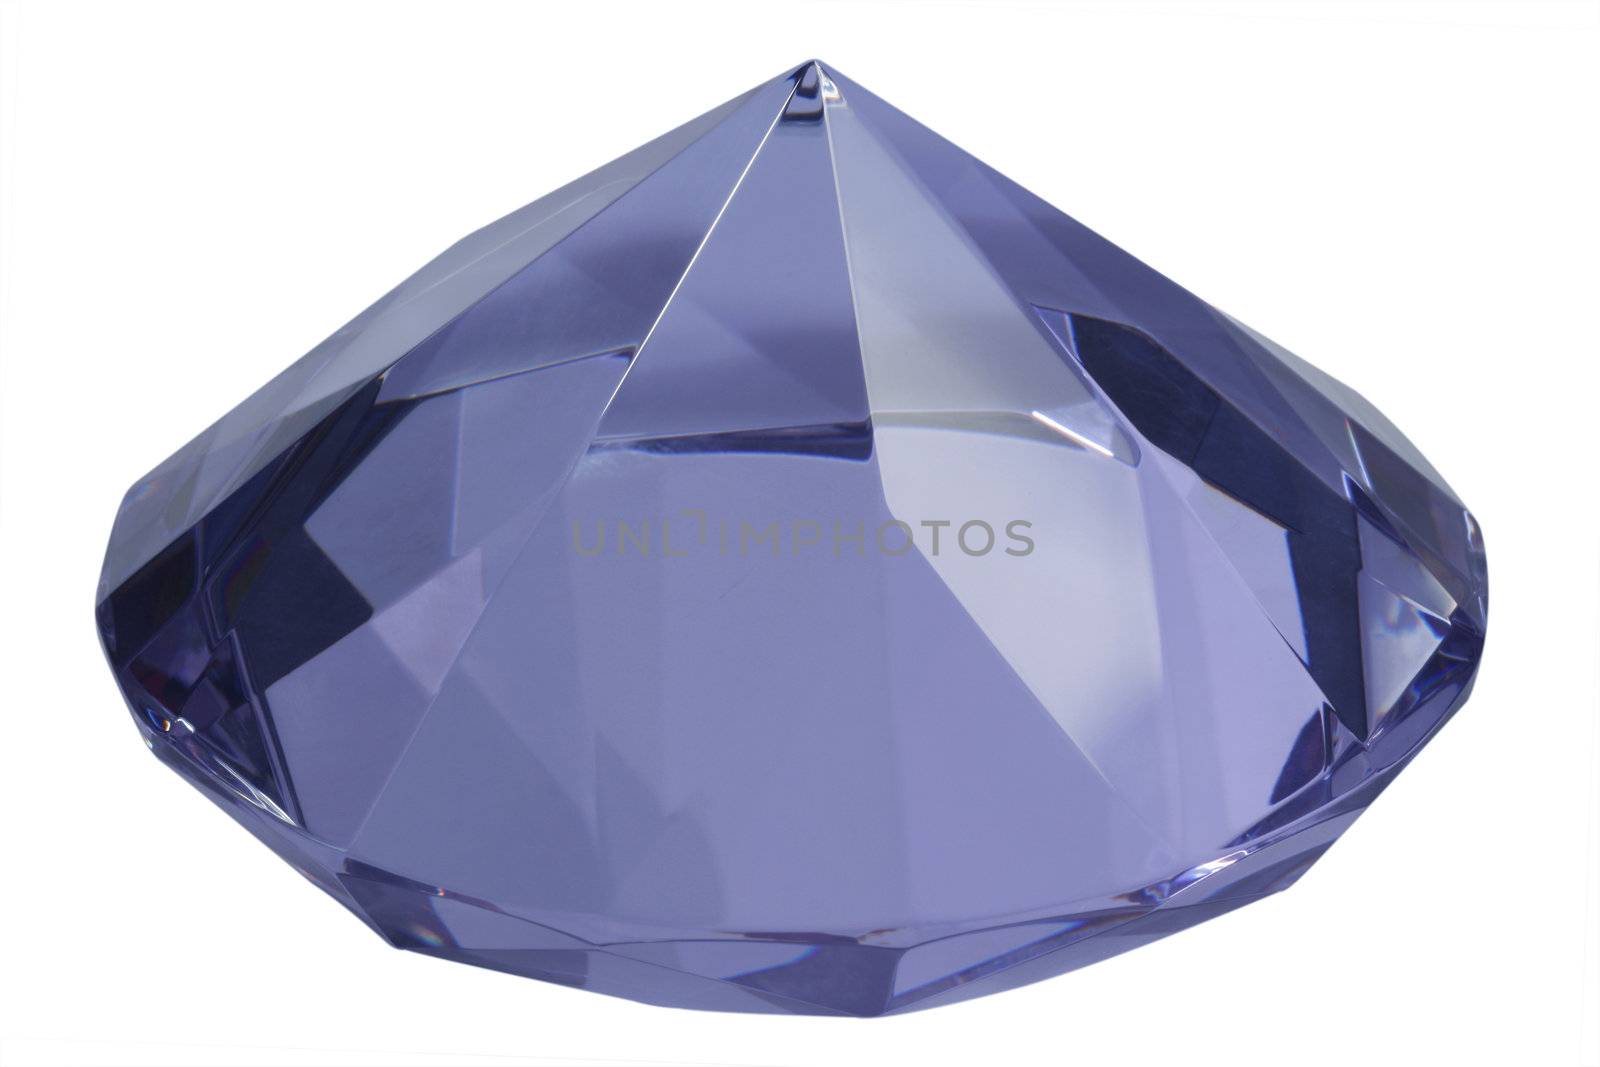 Blue diamond by Teamarbeit